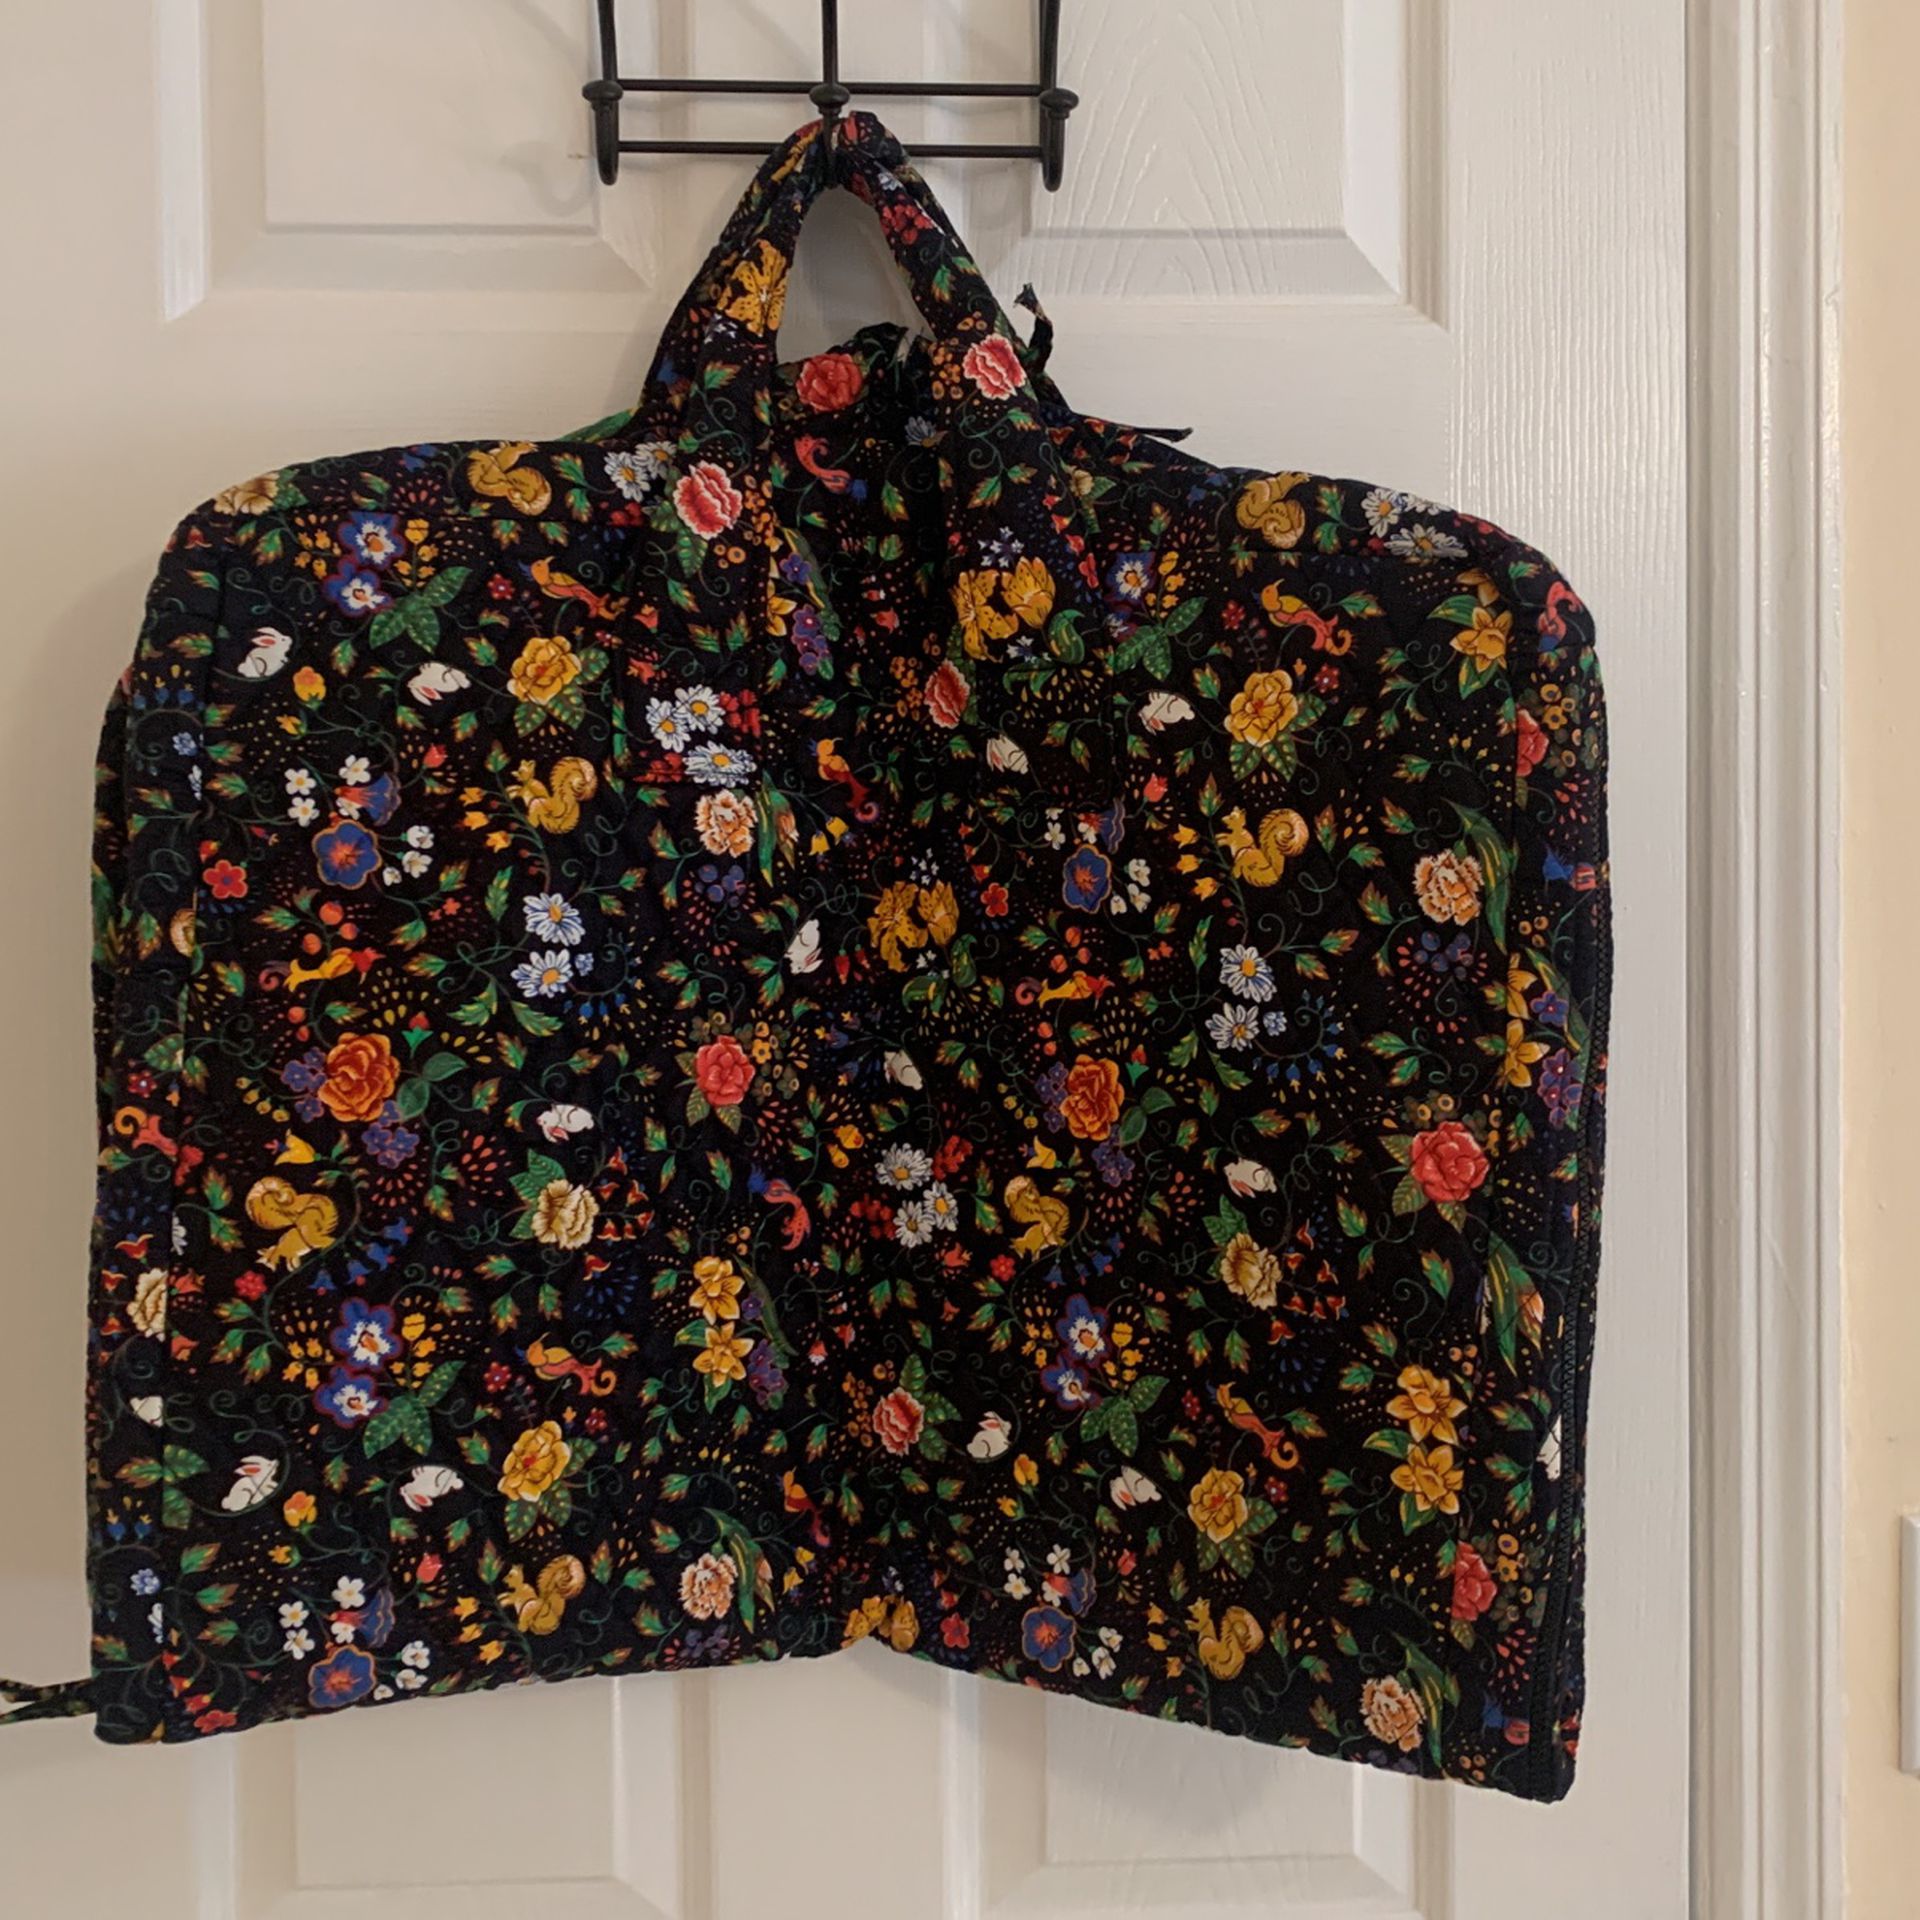 Vera Bradley Garment Bag Floral/Animal Print